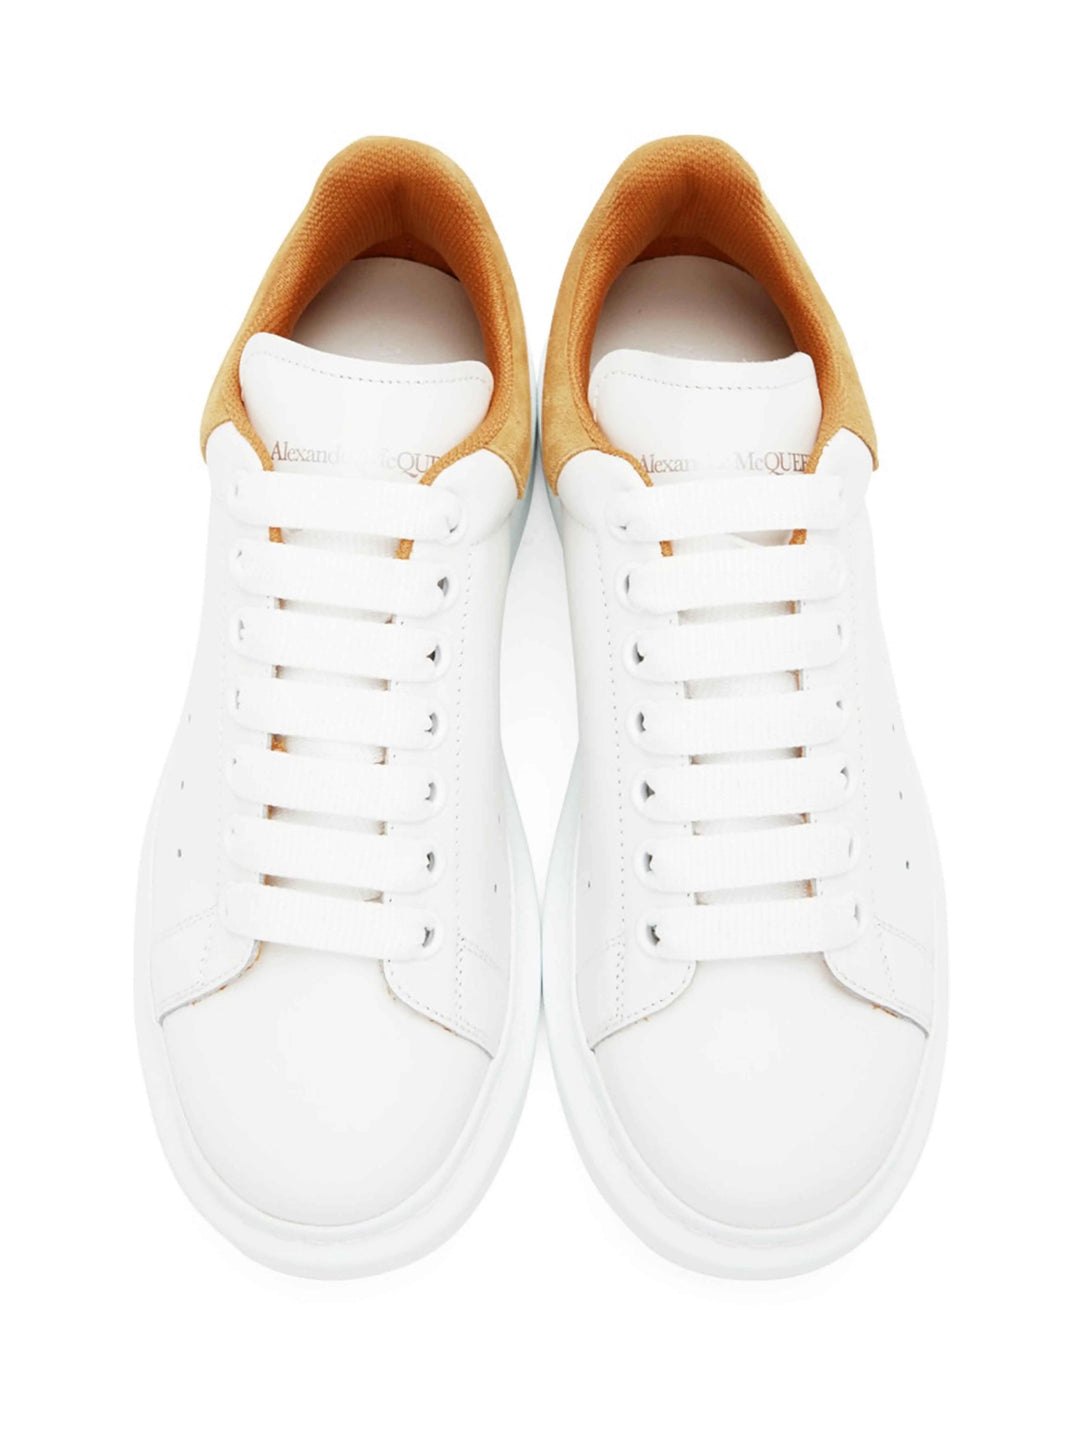 Alexander Mcqueen Oversized White/Yellow Sneakers Prior